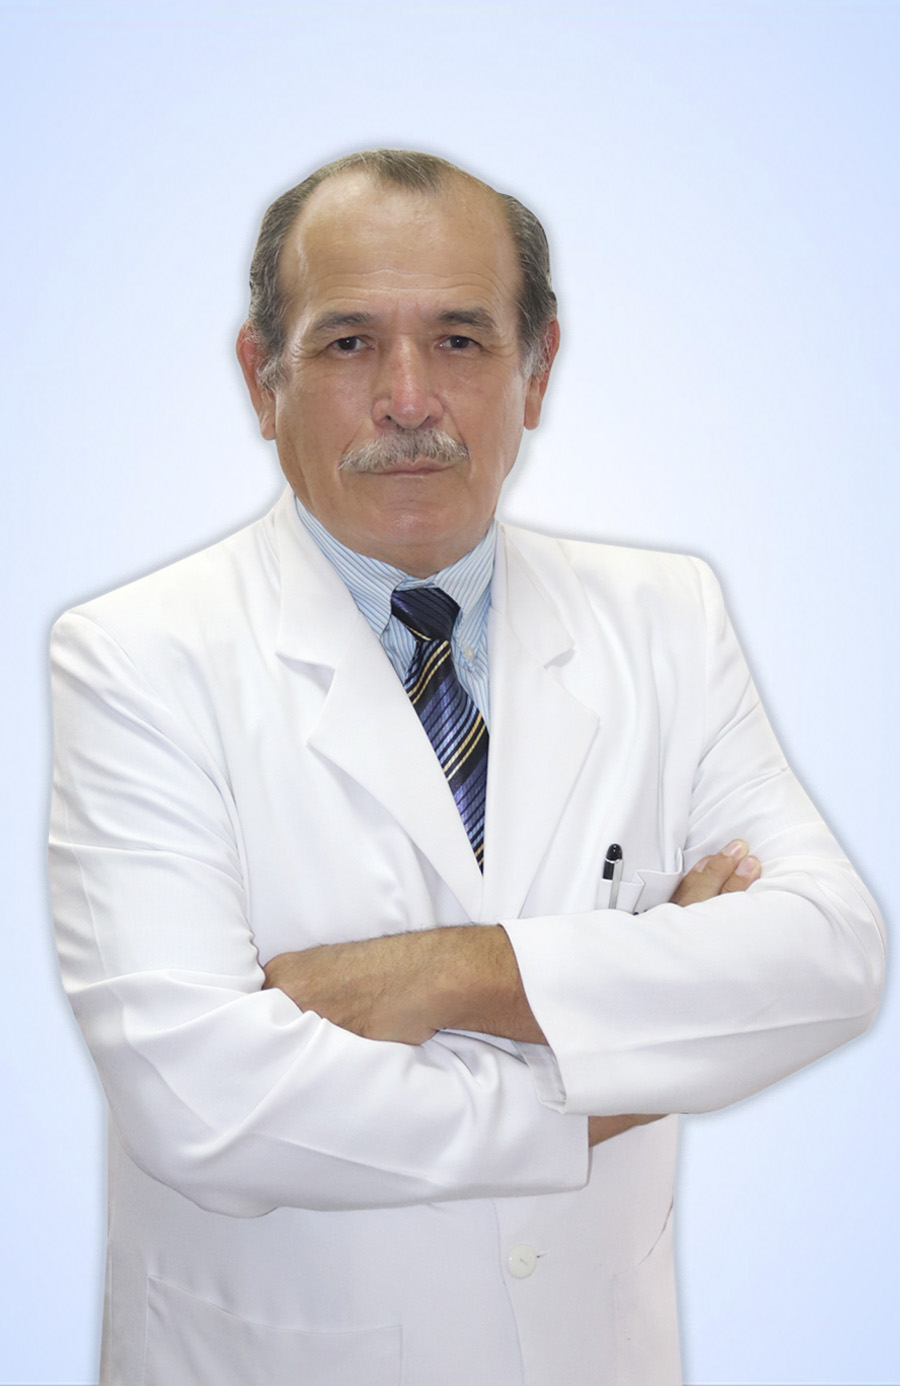 DR. AGUILAR